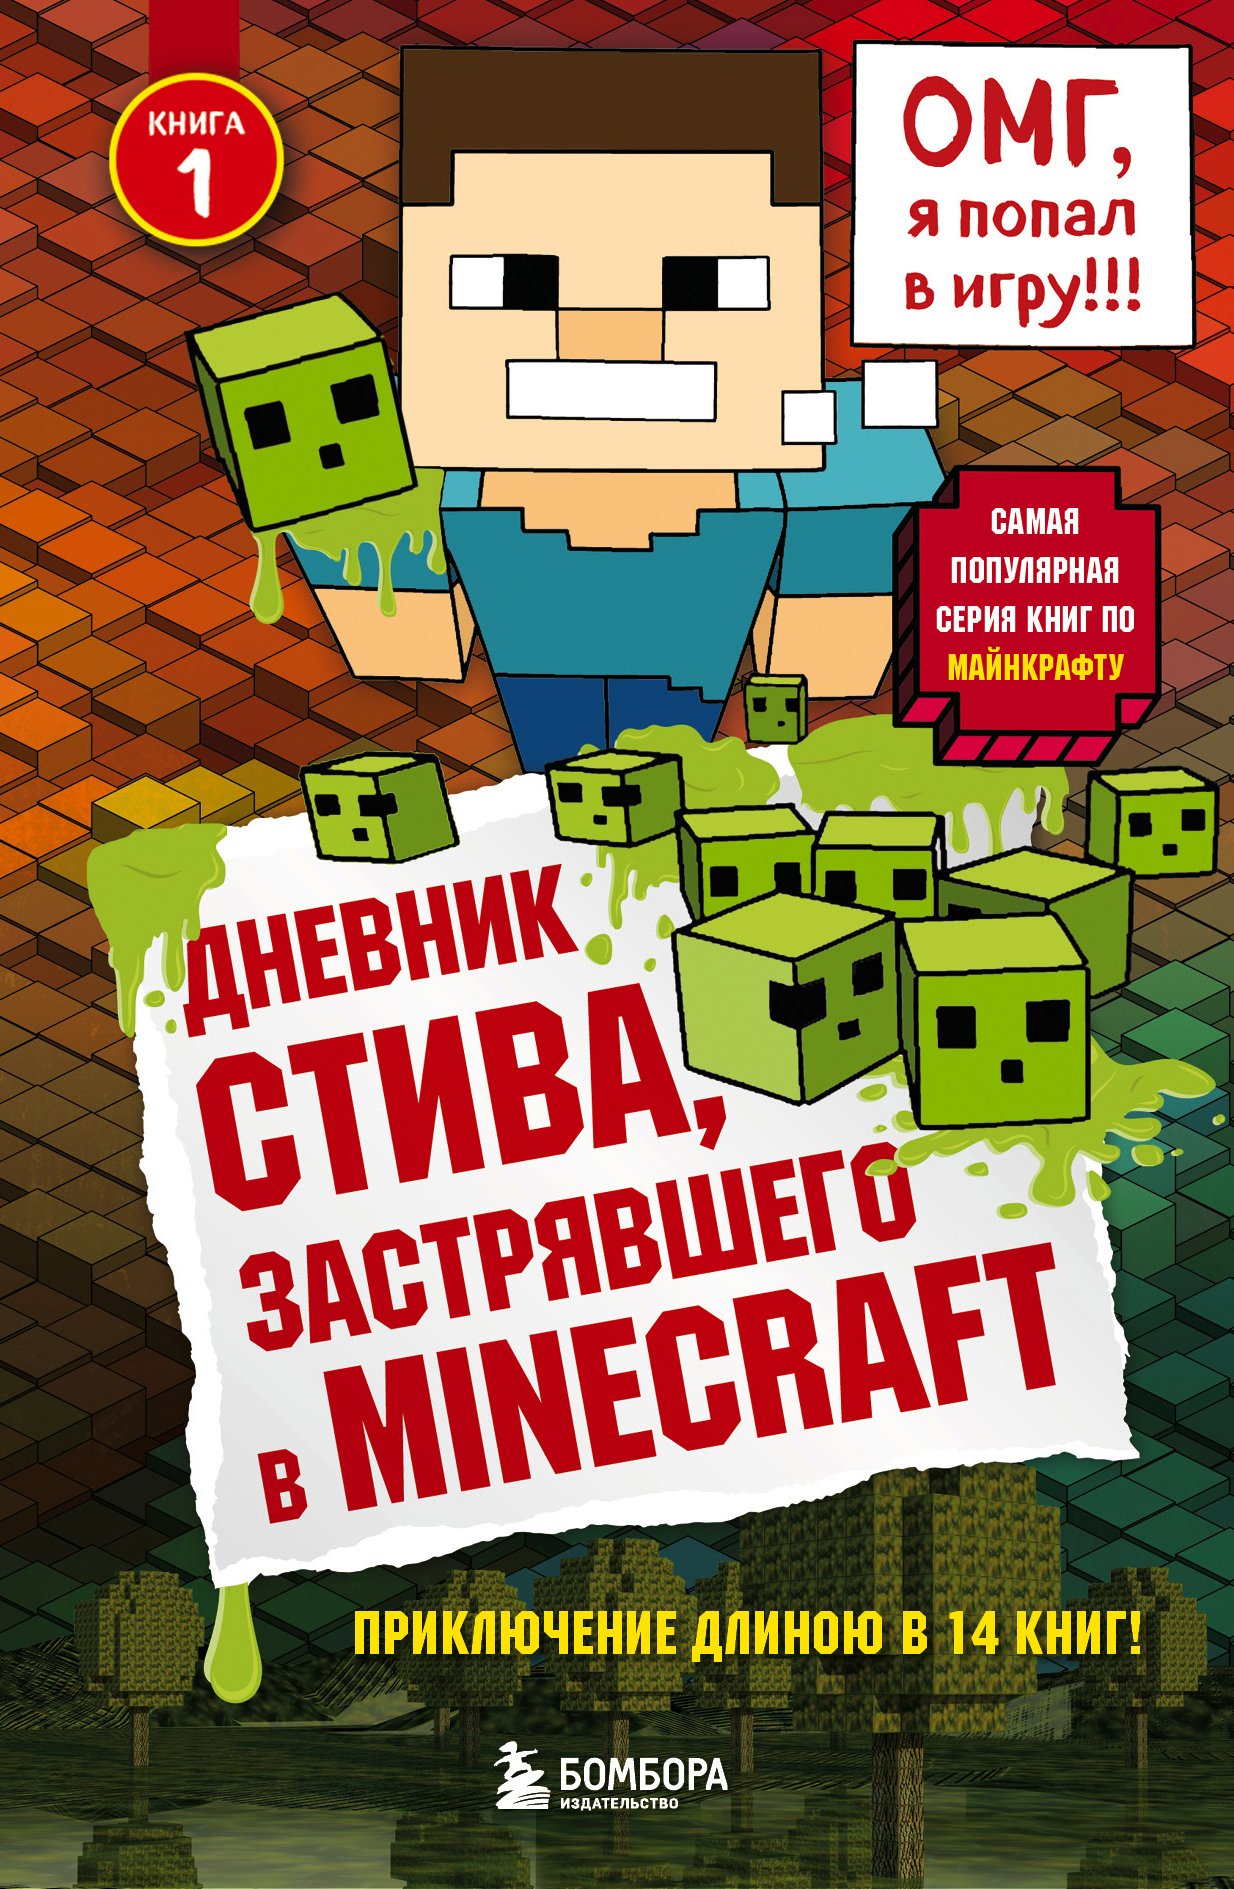  ,   Minecraft.  1